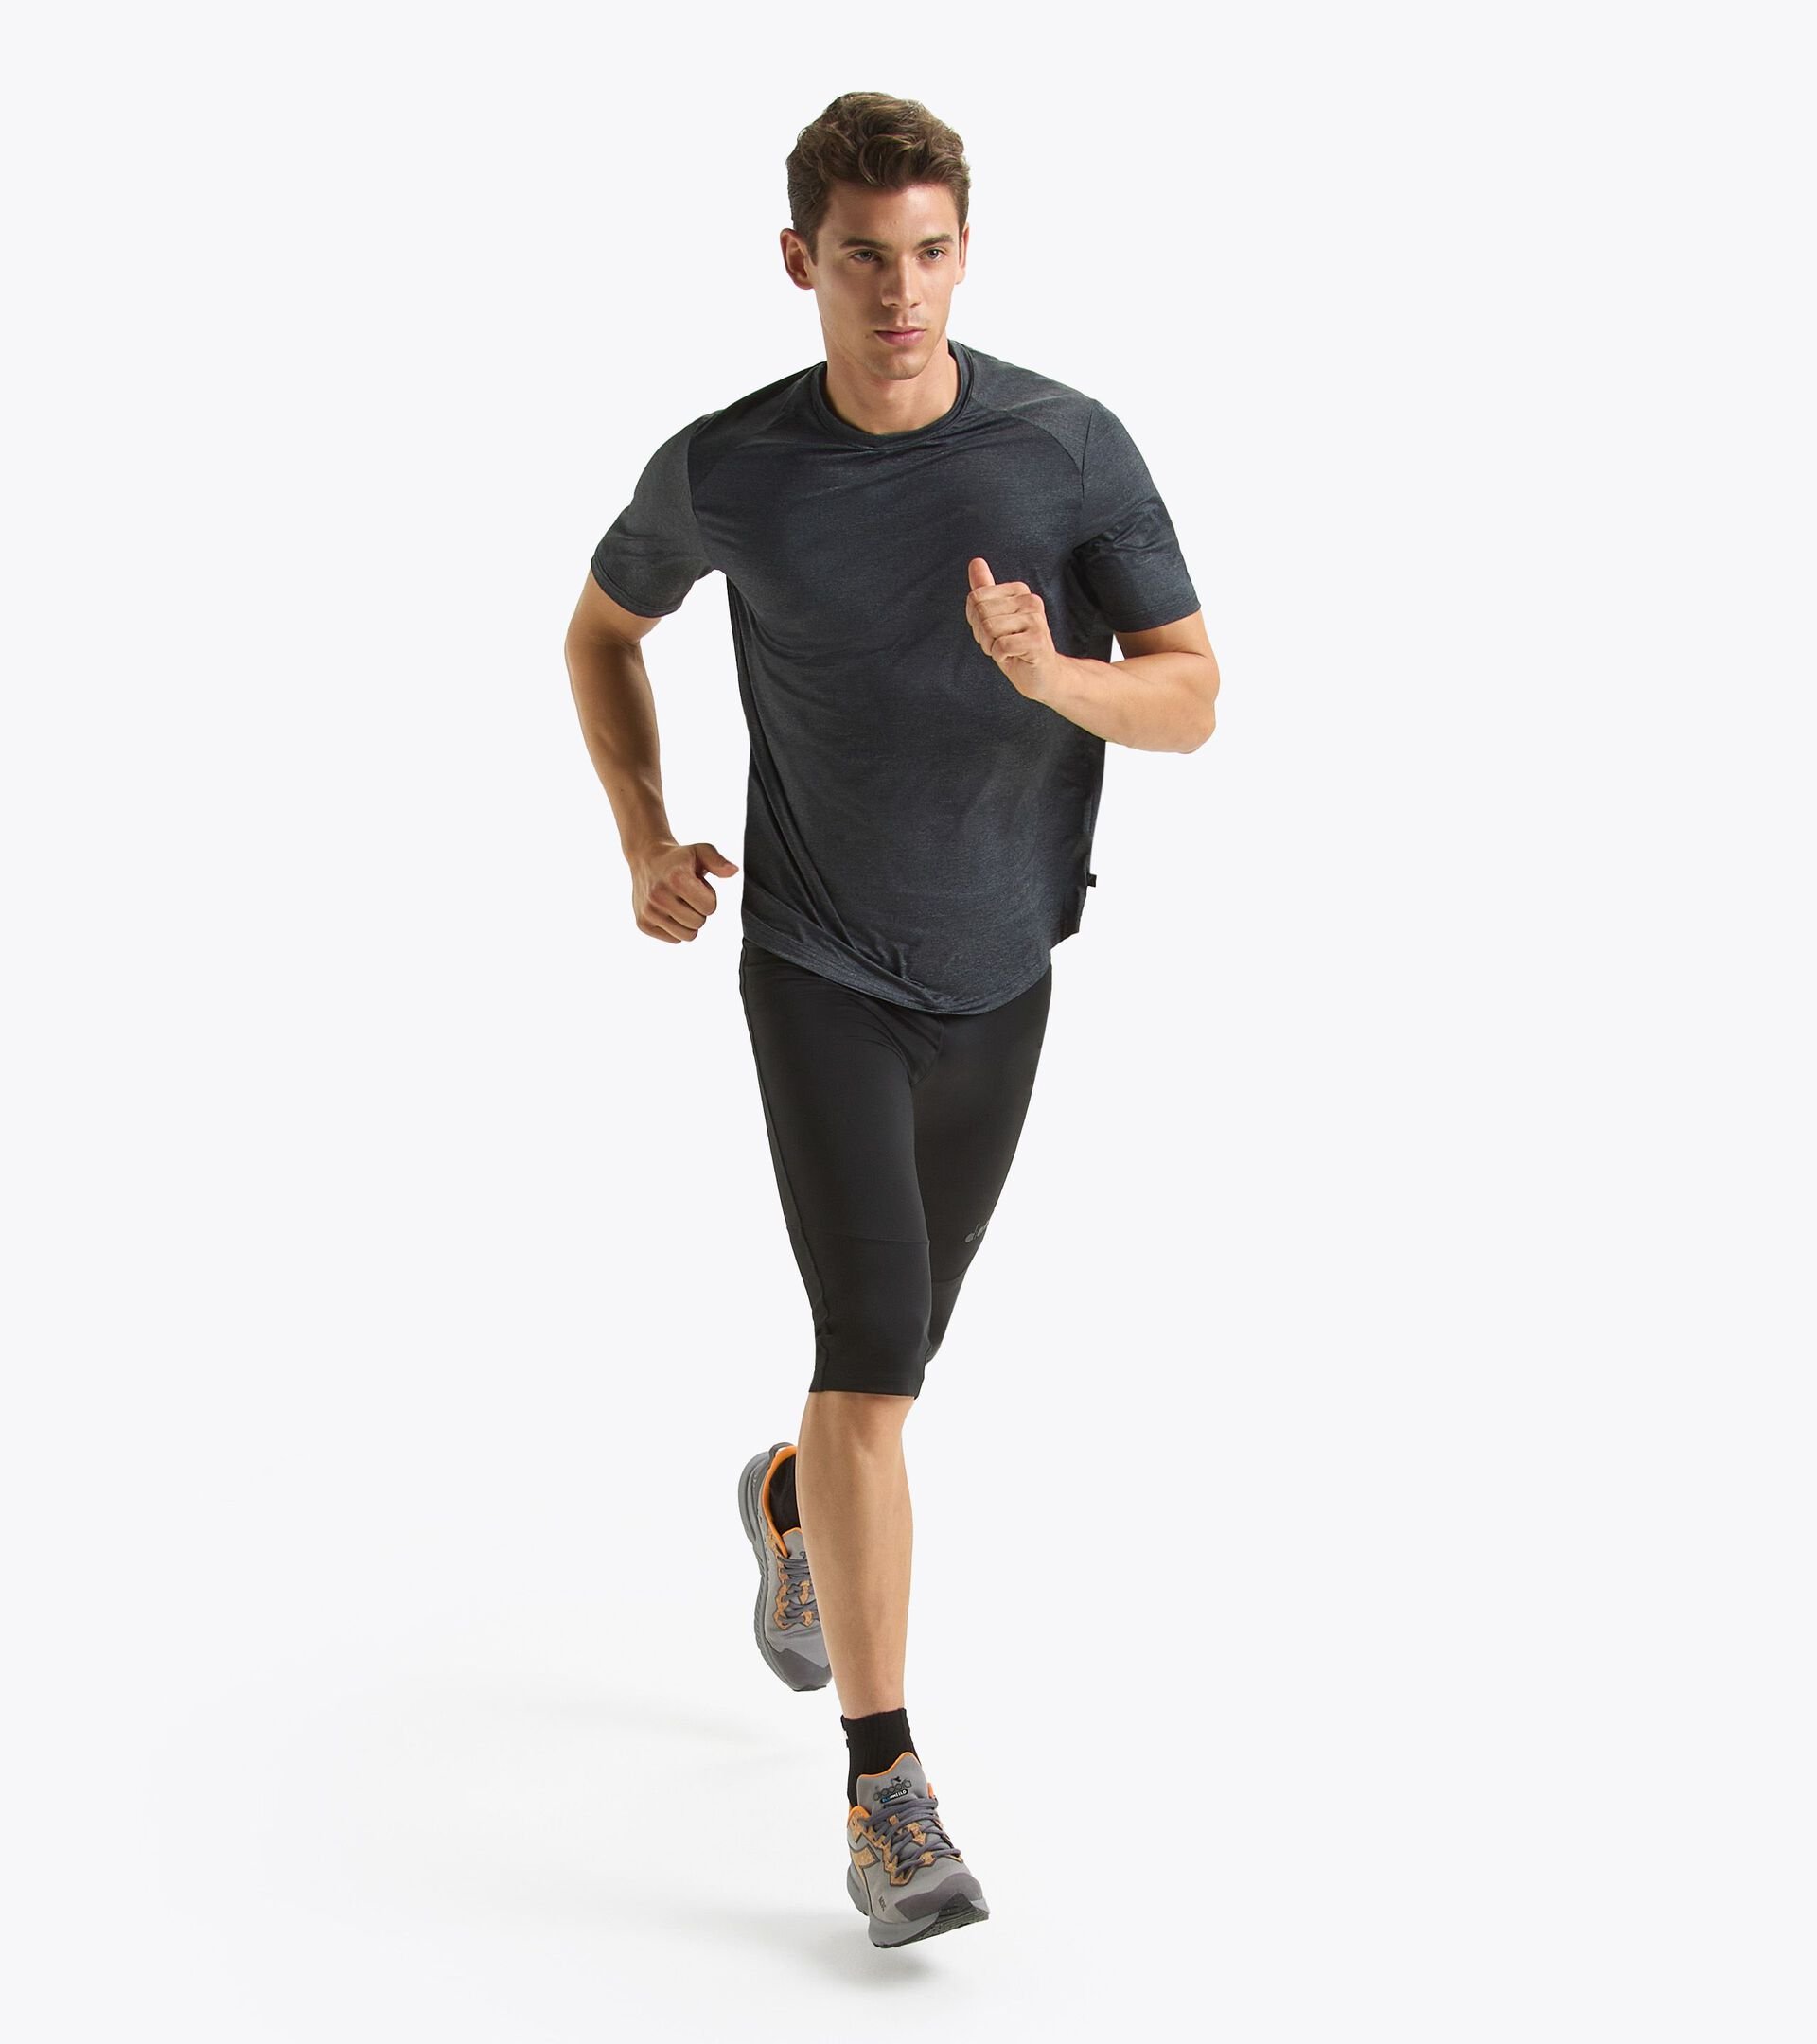 RUNNING TIGHTS Contoured running leggings - Men - Diadora Online Store CA